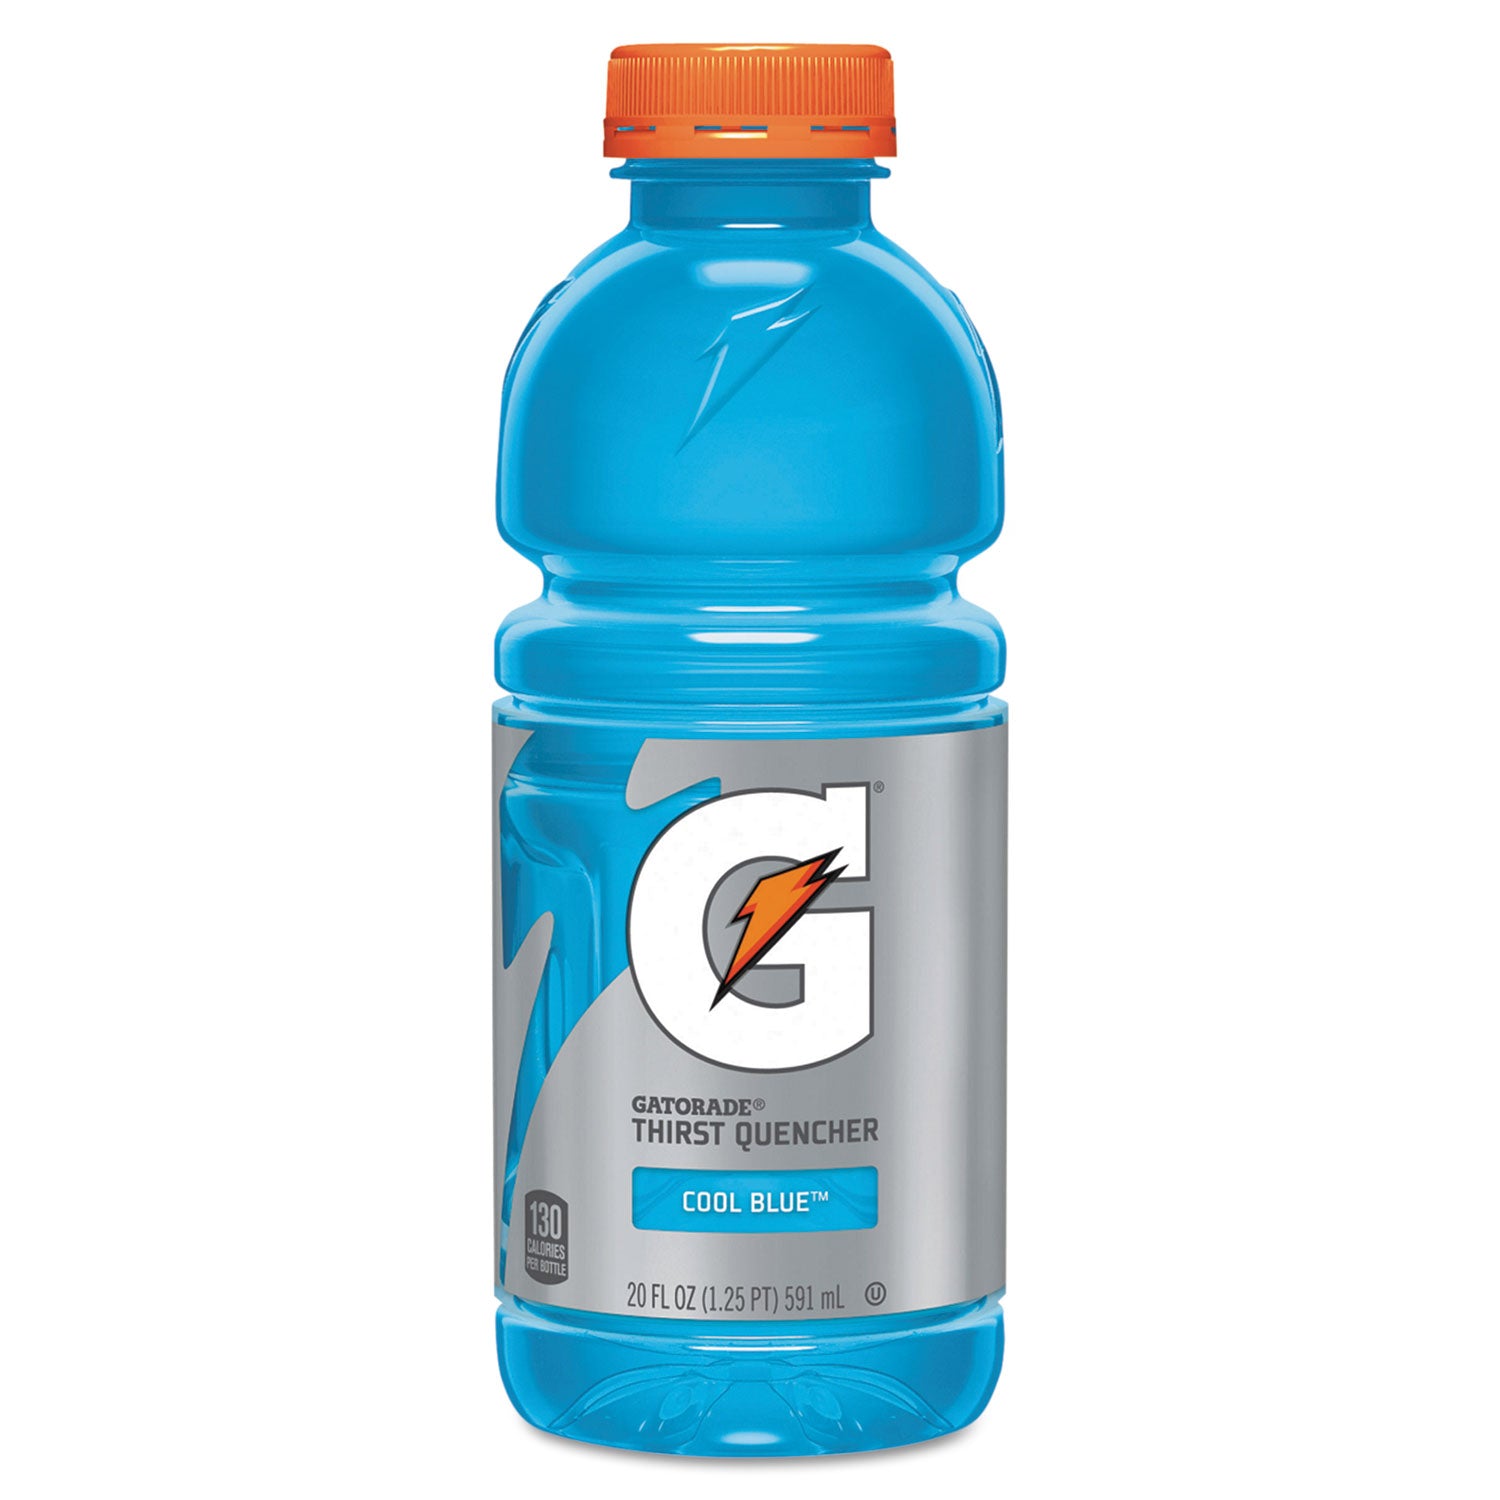 g-series-perform-02-thirst-quencher-cool-blue-20-oz-bottle-24-carton_qkr24812 - 1